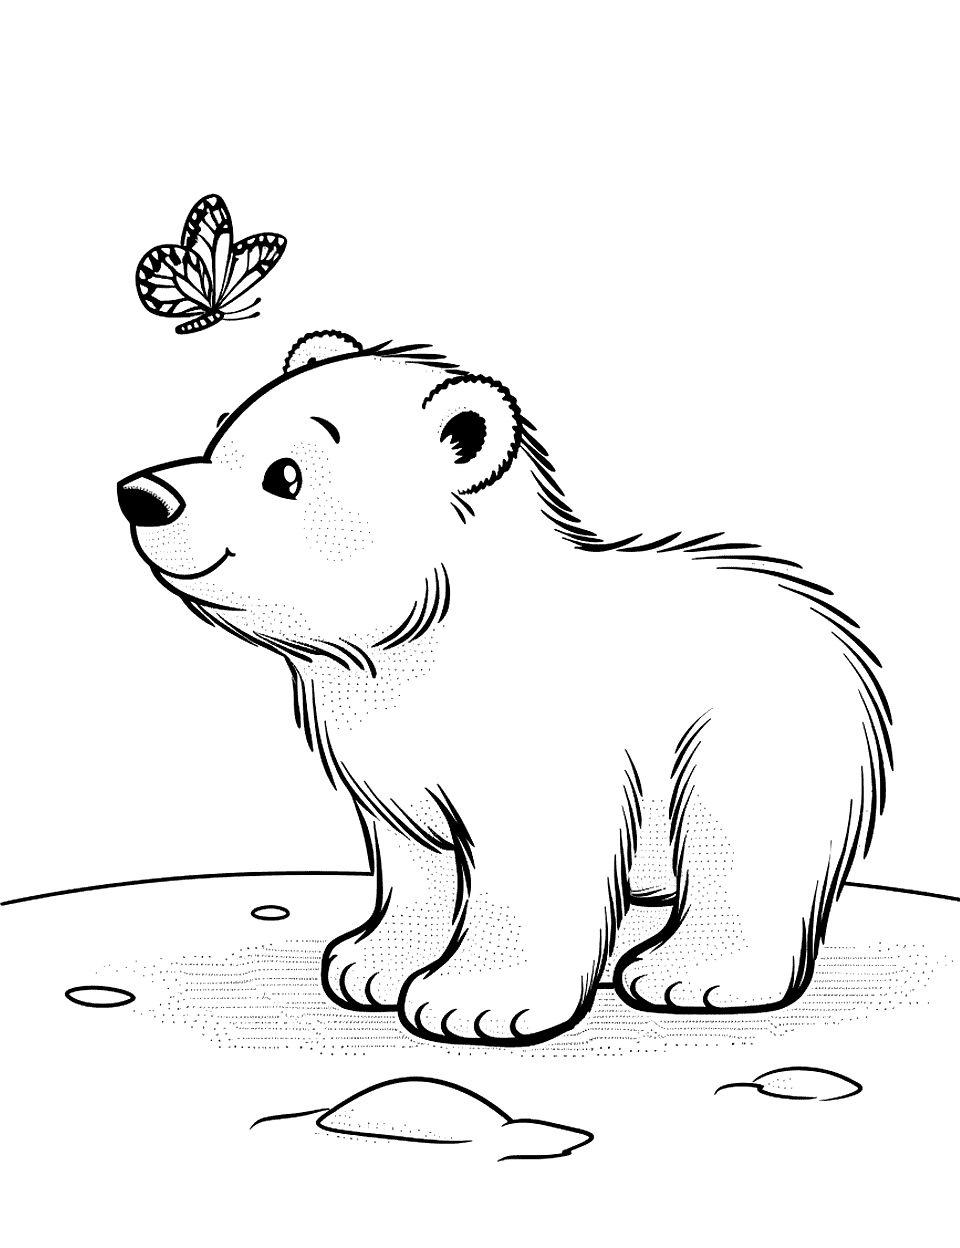 Curious Polar Bear Cub Coloring Page - A polar bear cub curiously looking at a butterfly.